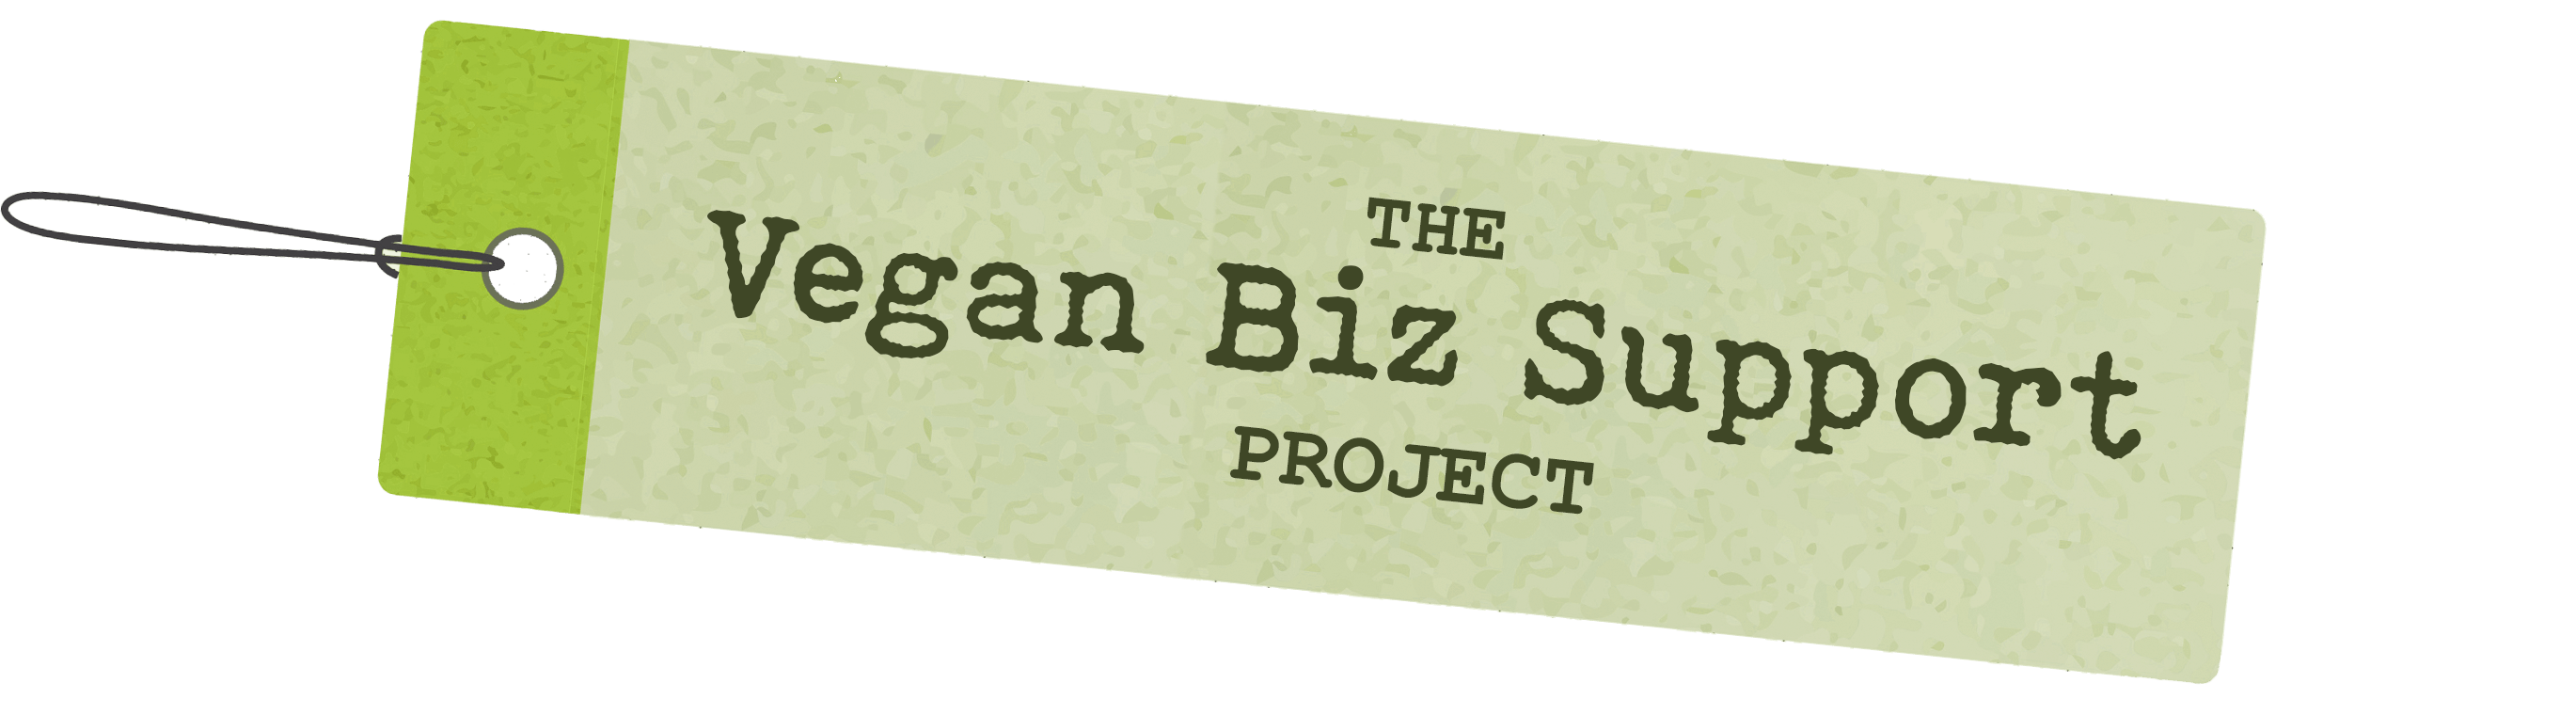 The Vegan Biz Support Project